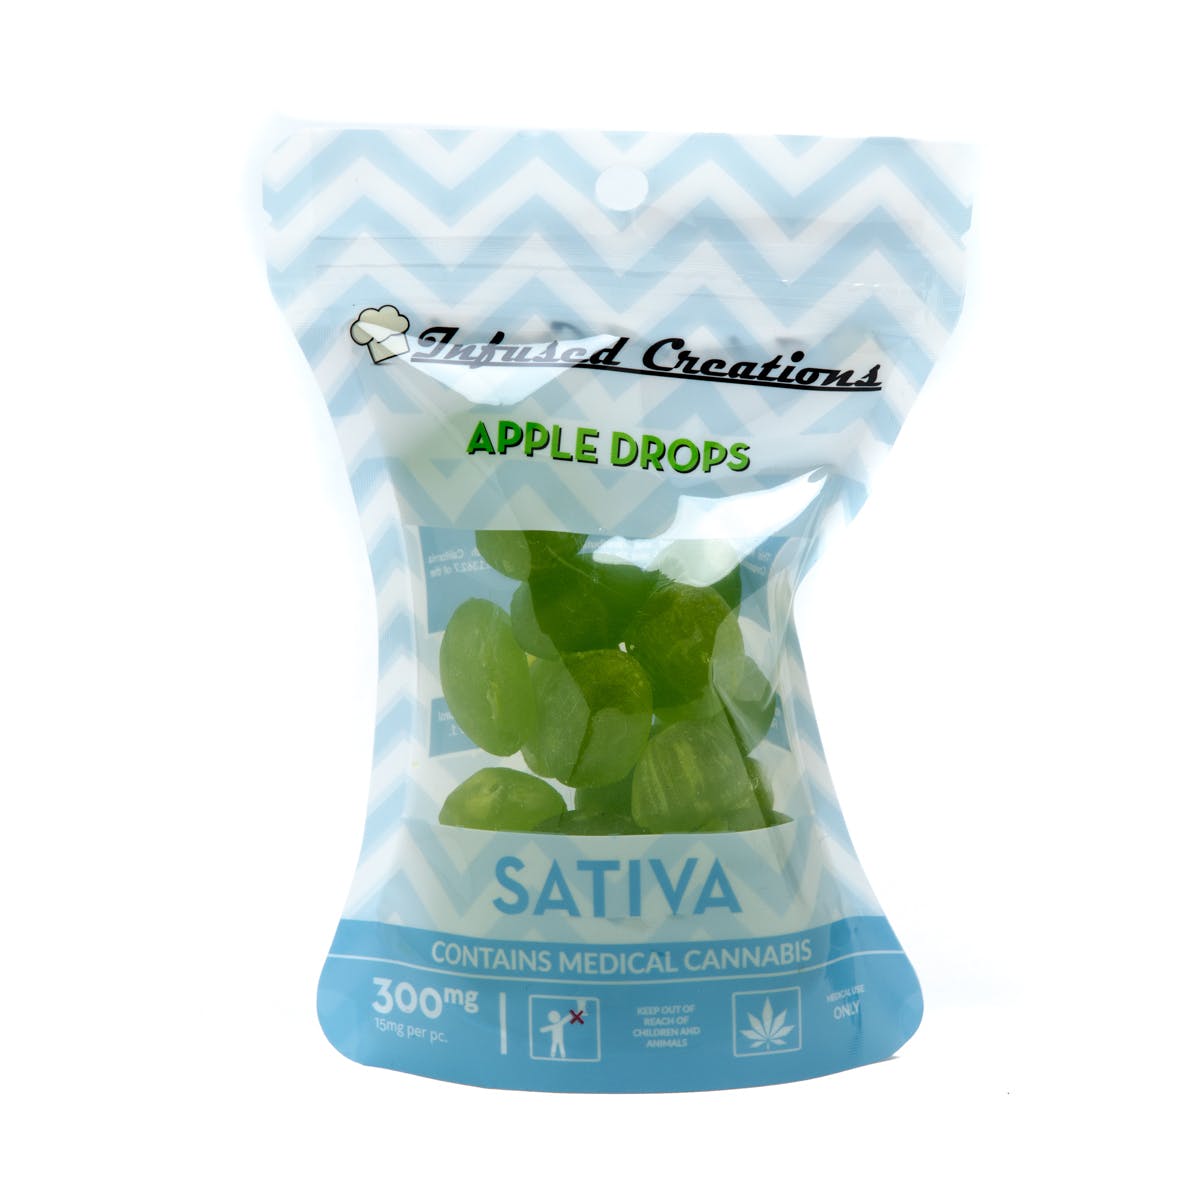 Apple Drops Sativa, 300mg